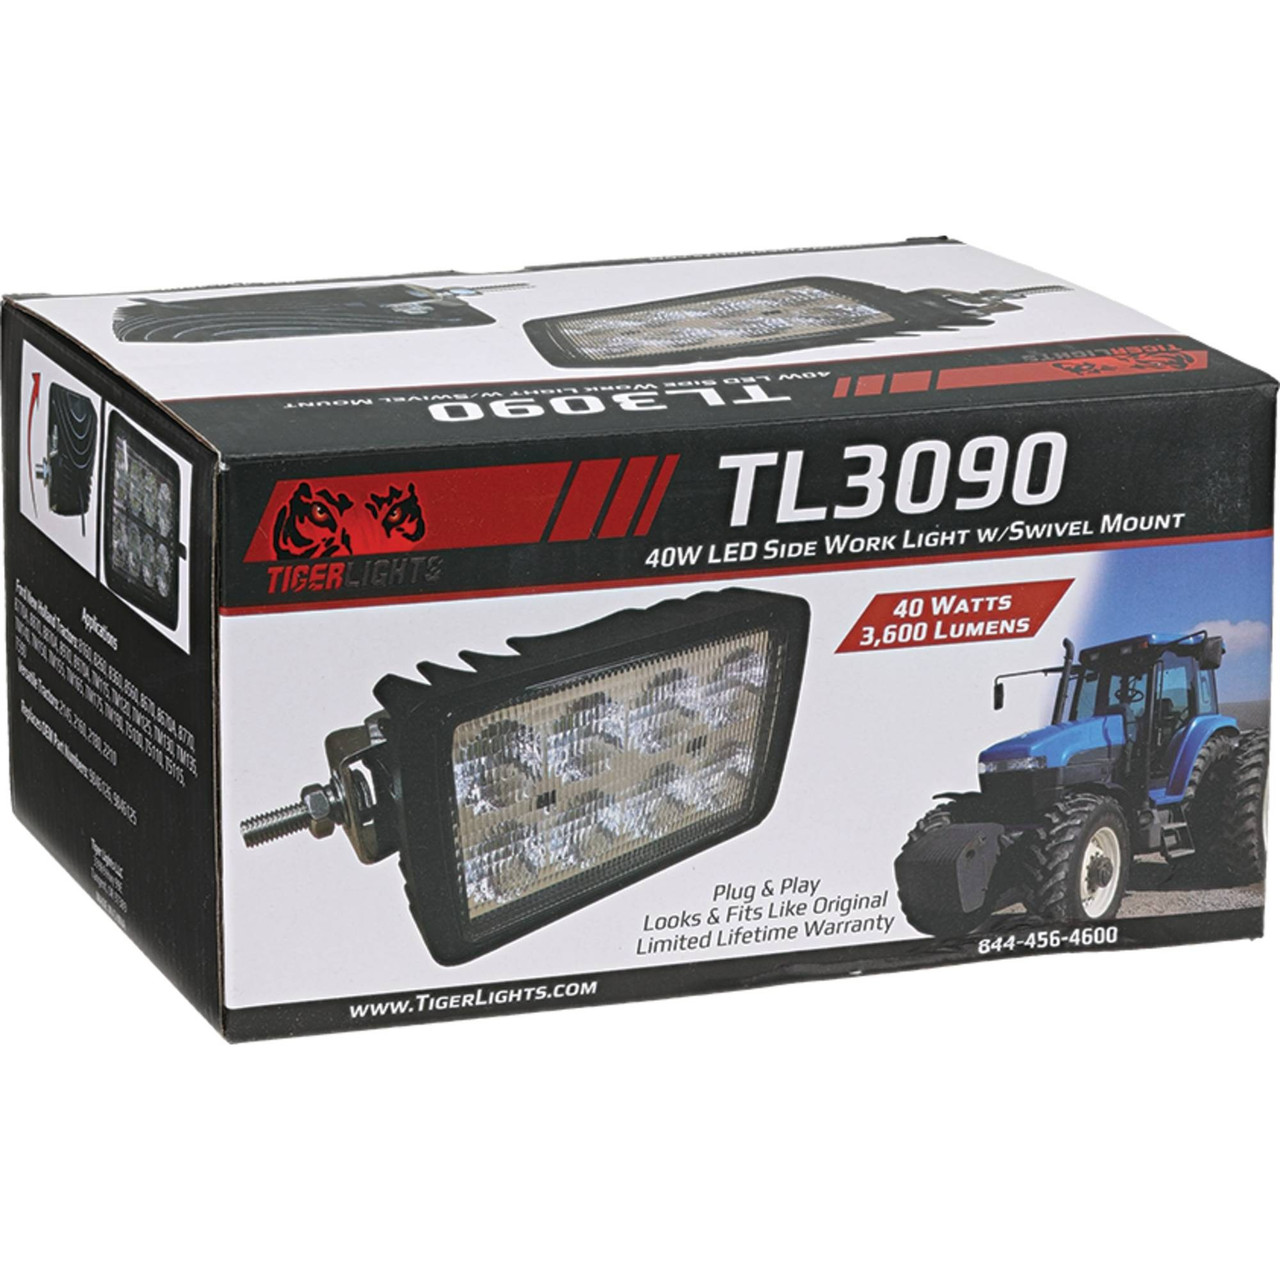 LED Tractor Cab Light 9846126 Agricultural LED Lights from Tiger Lights